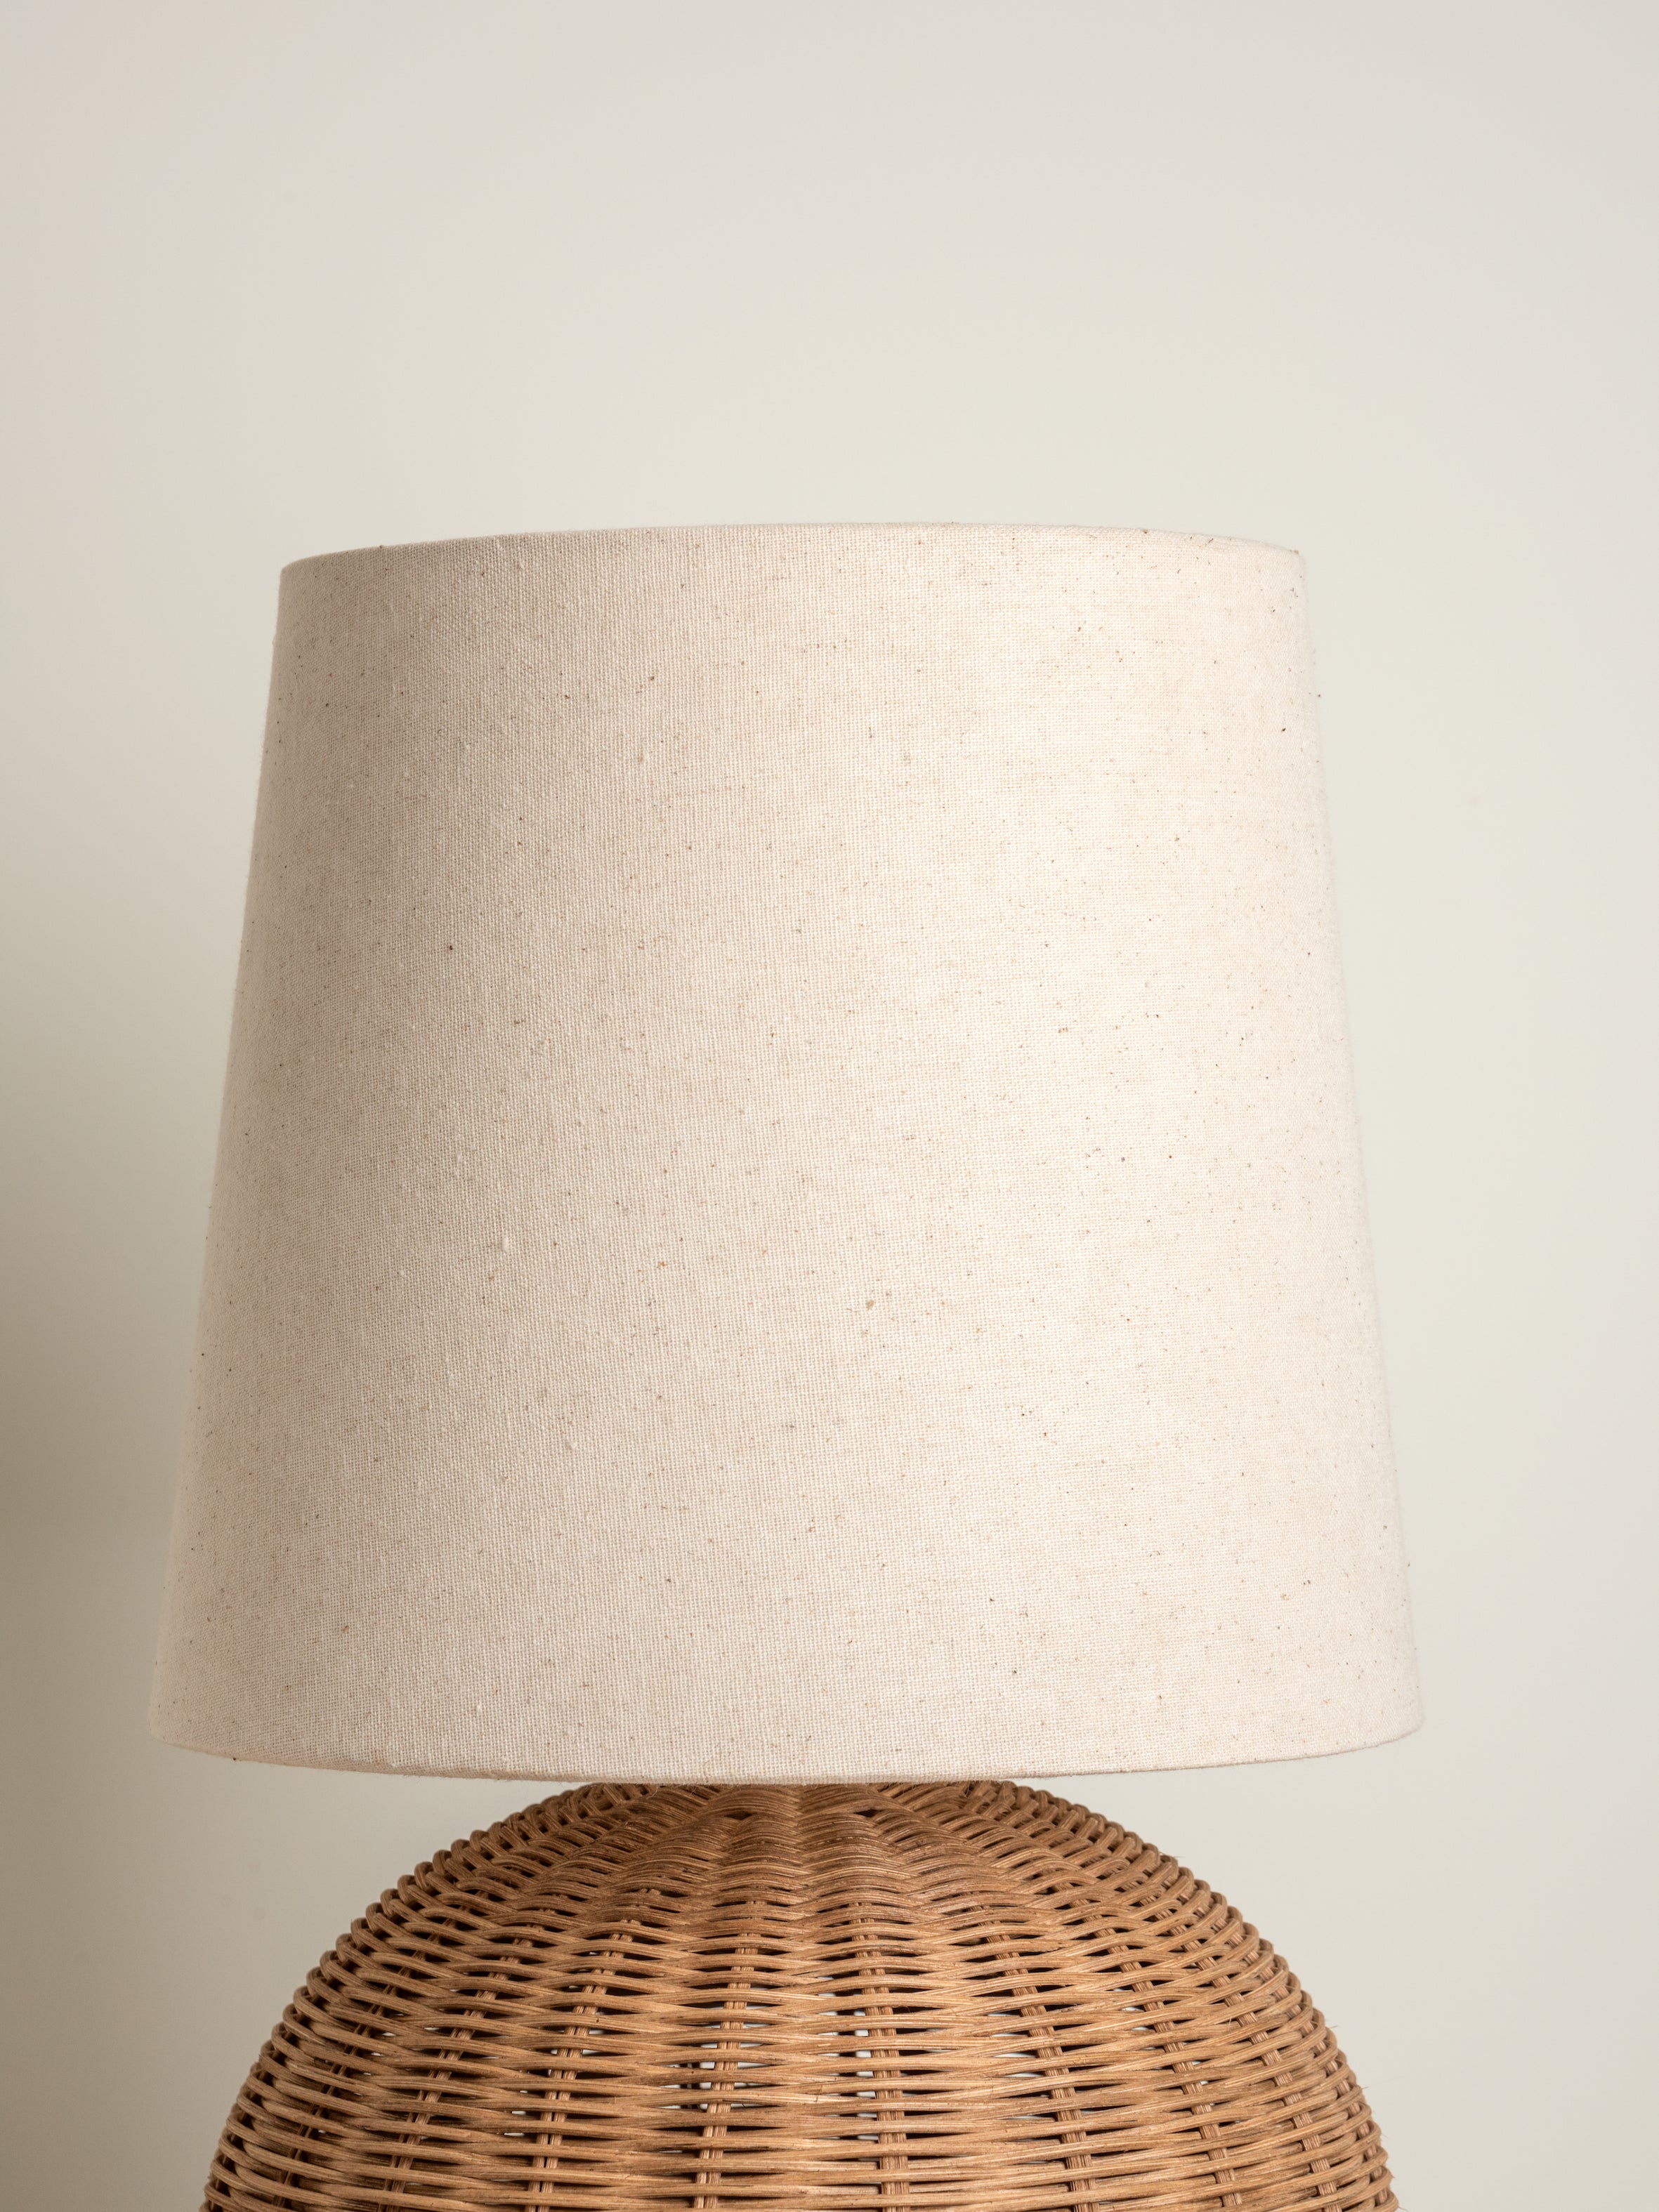 Sanvi - rattan globe table lamp | Table Lamp | Lights & Lamps | UK | Modern Affordable Designer Lighting